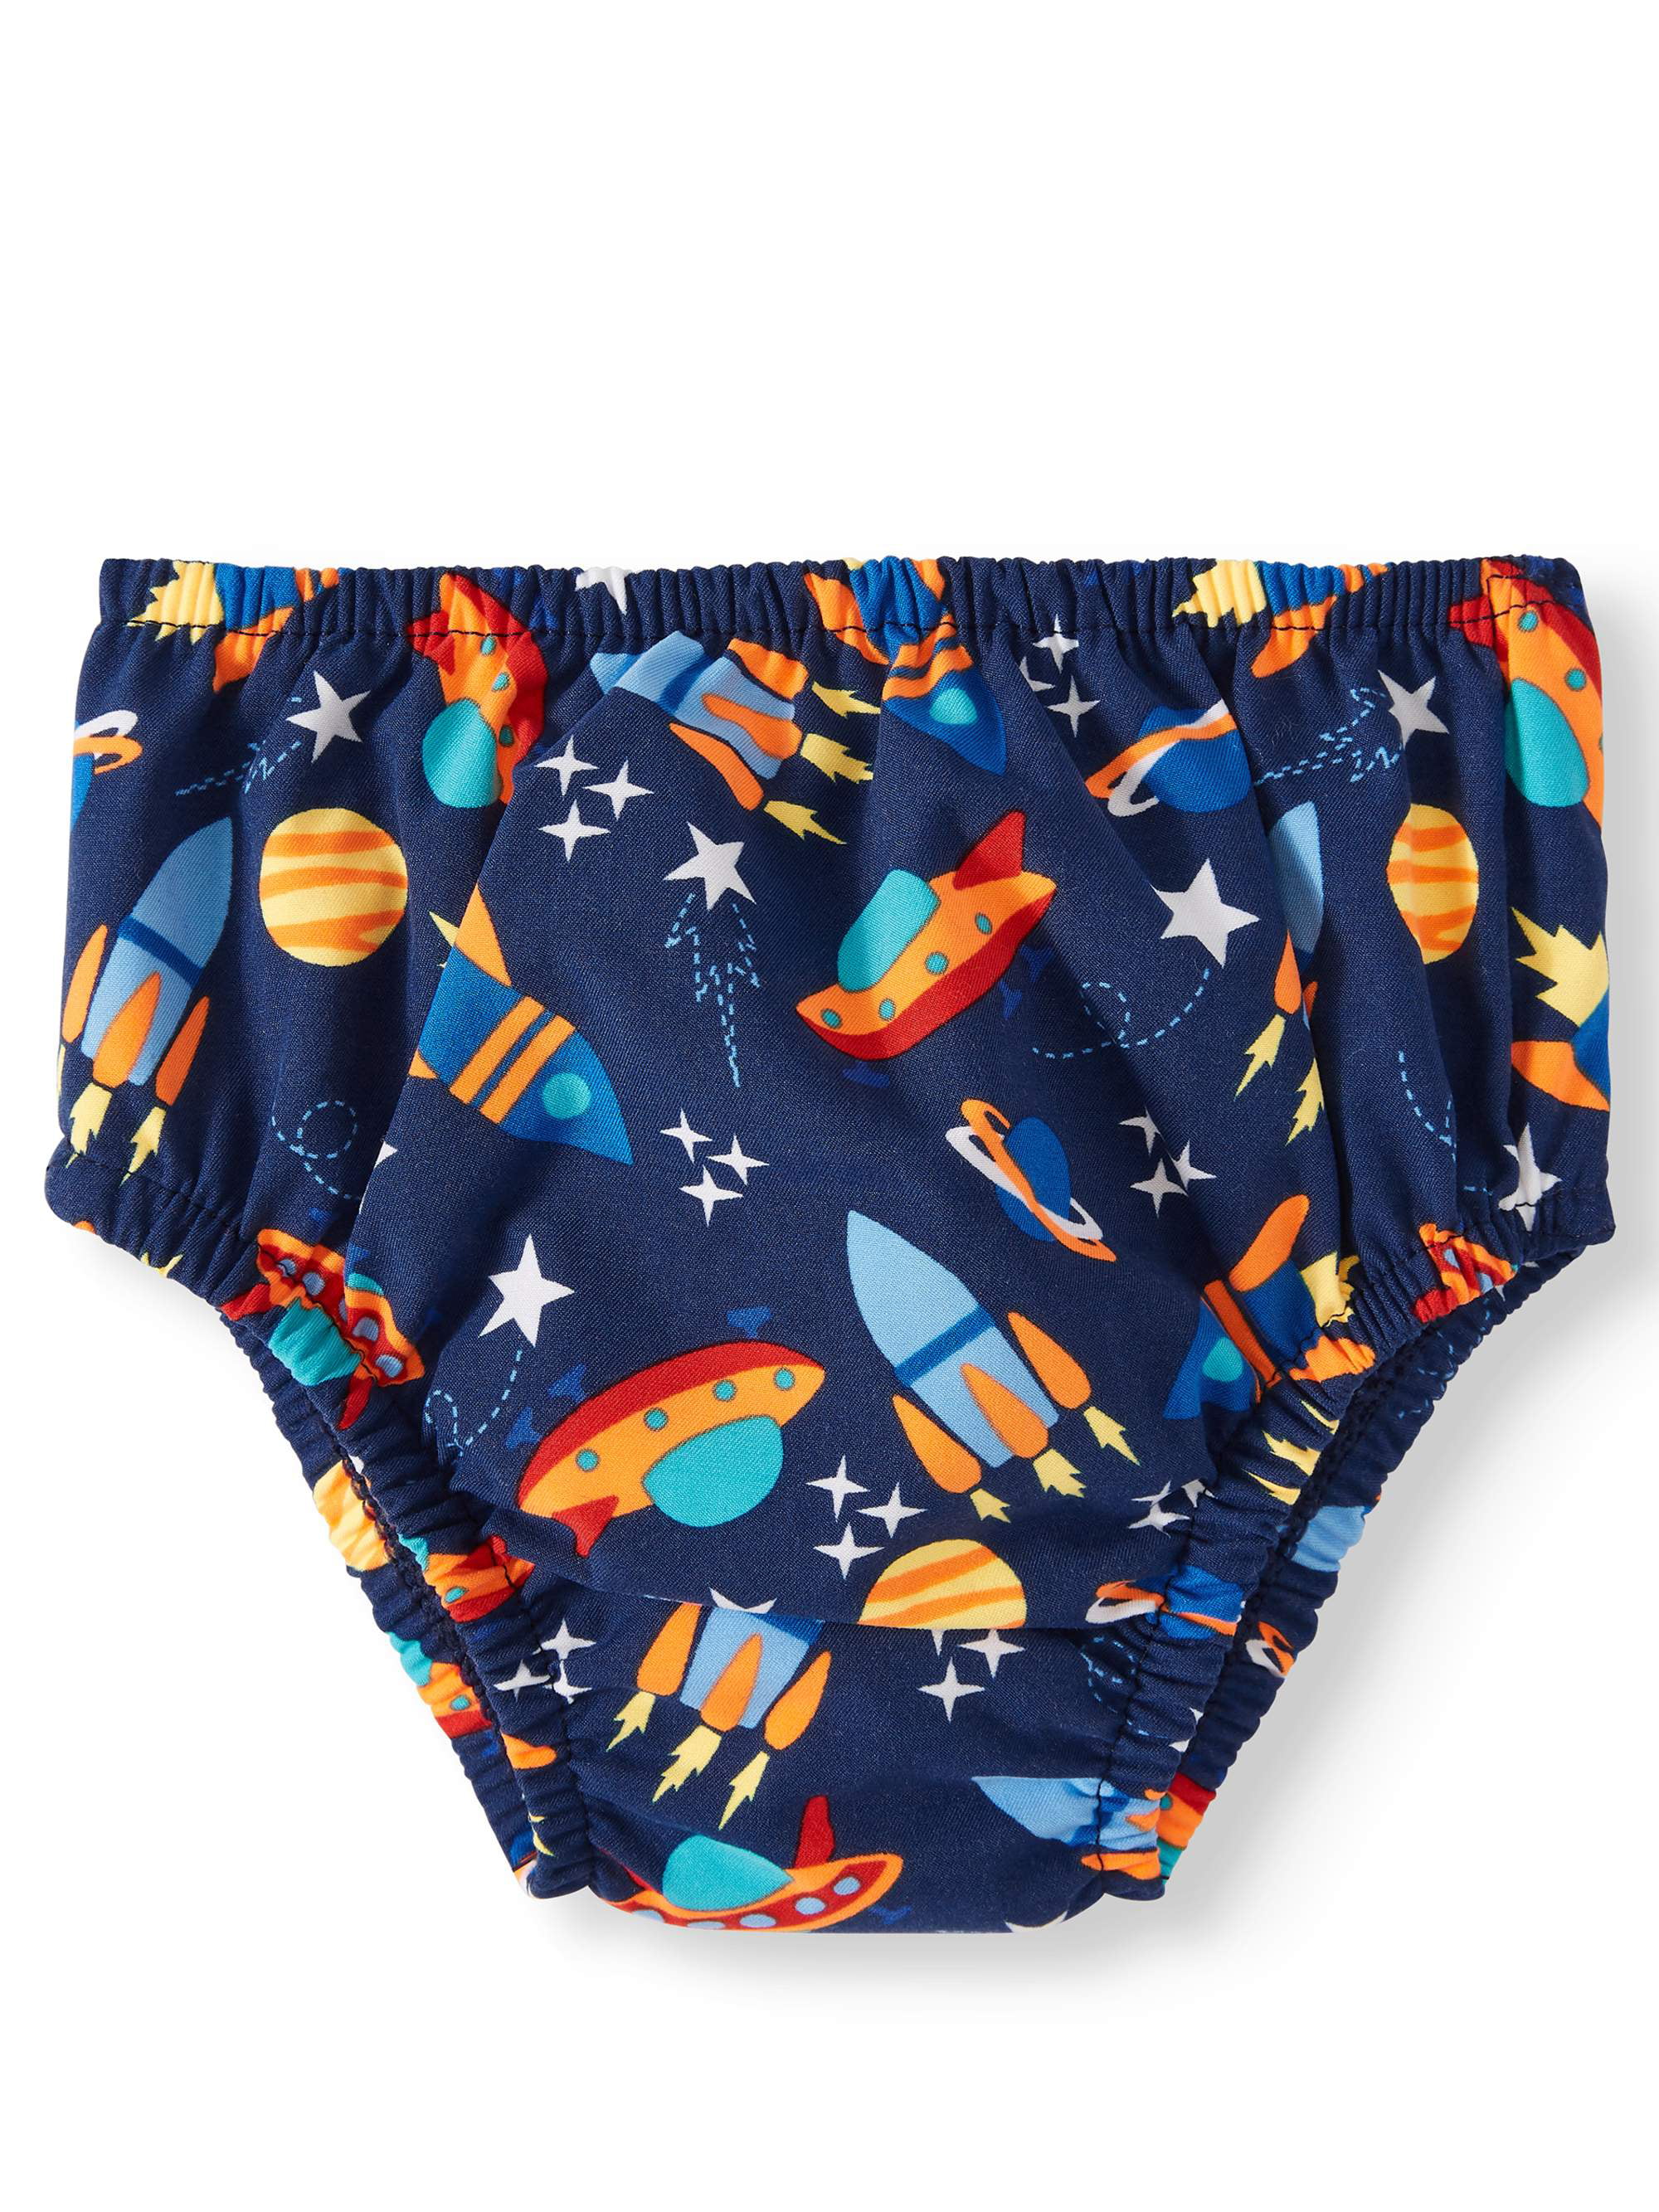 Swim Time Boys Baby Reusable Swim Diaper UPF 50 with Side Snaps, Navy  Space/Rocketships, X Large 18-24M - Walmart.com